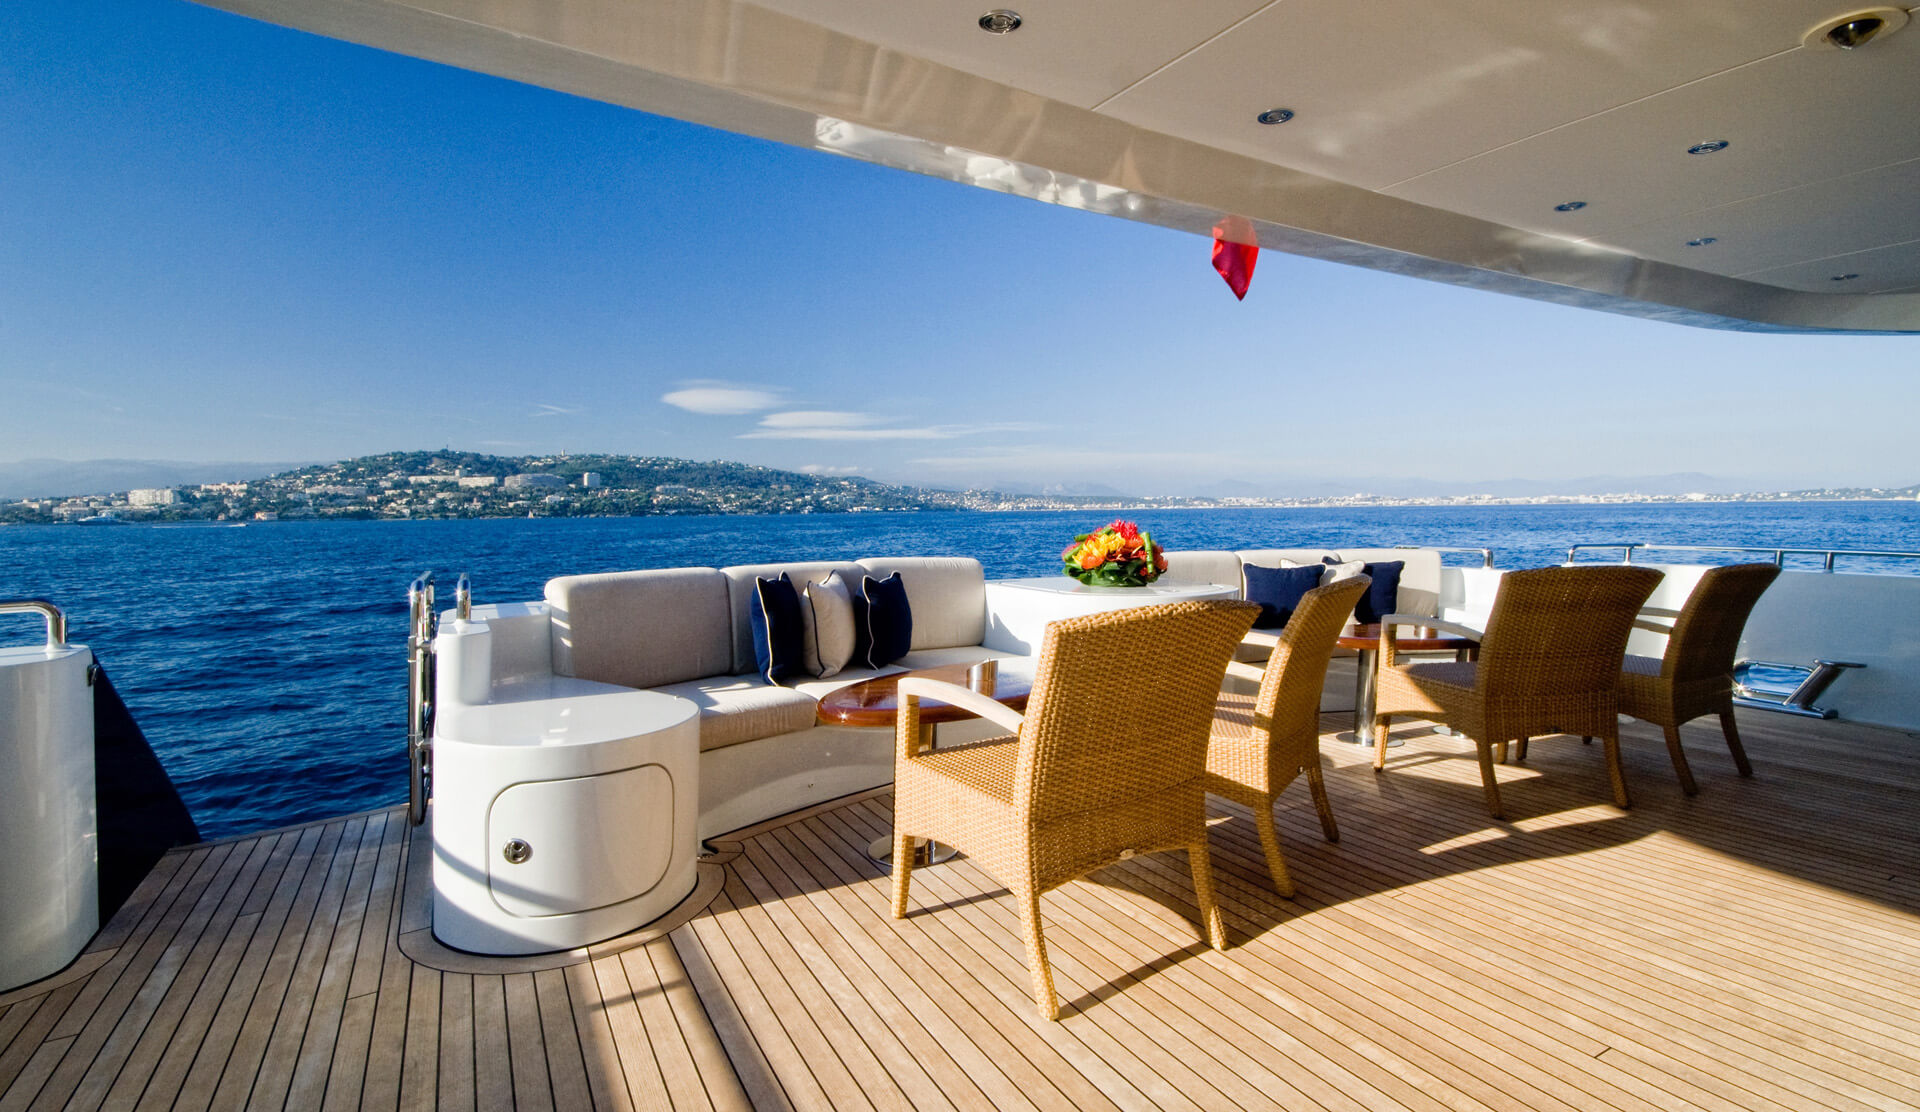 KIJO yacht aft deck seating